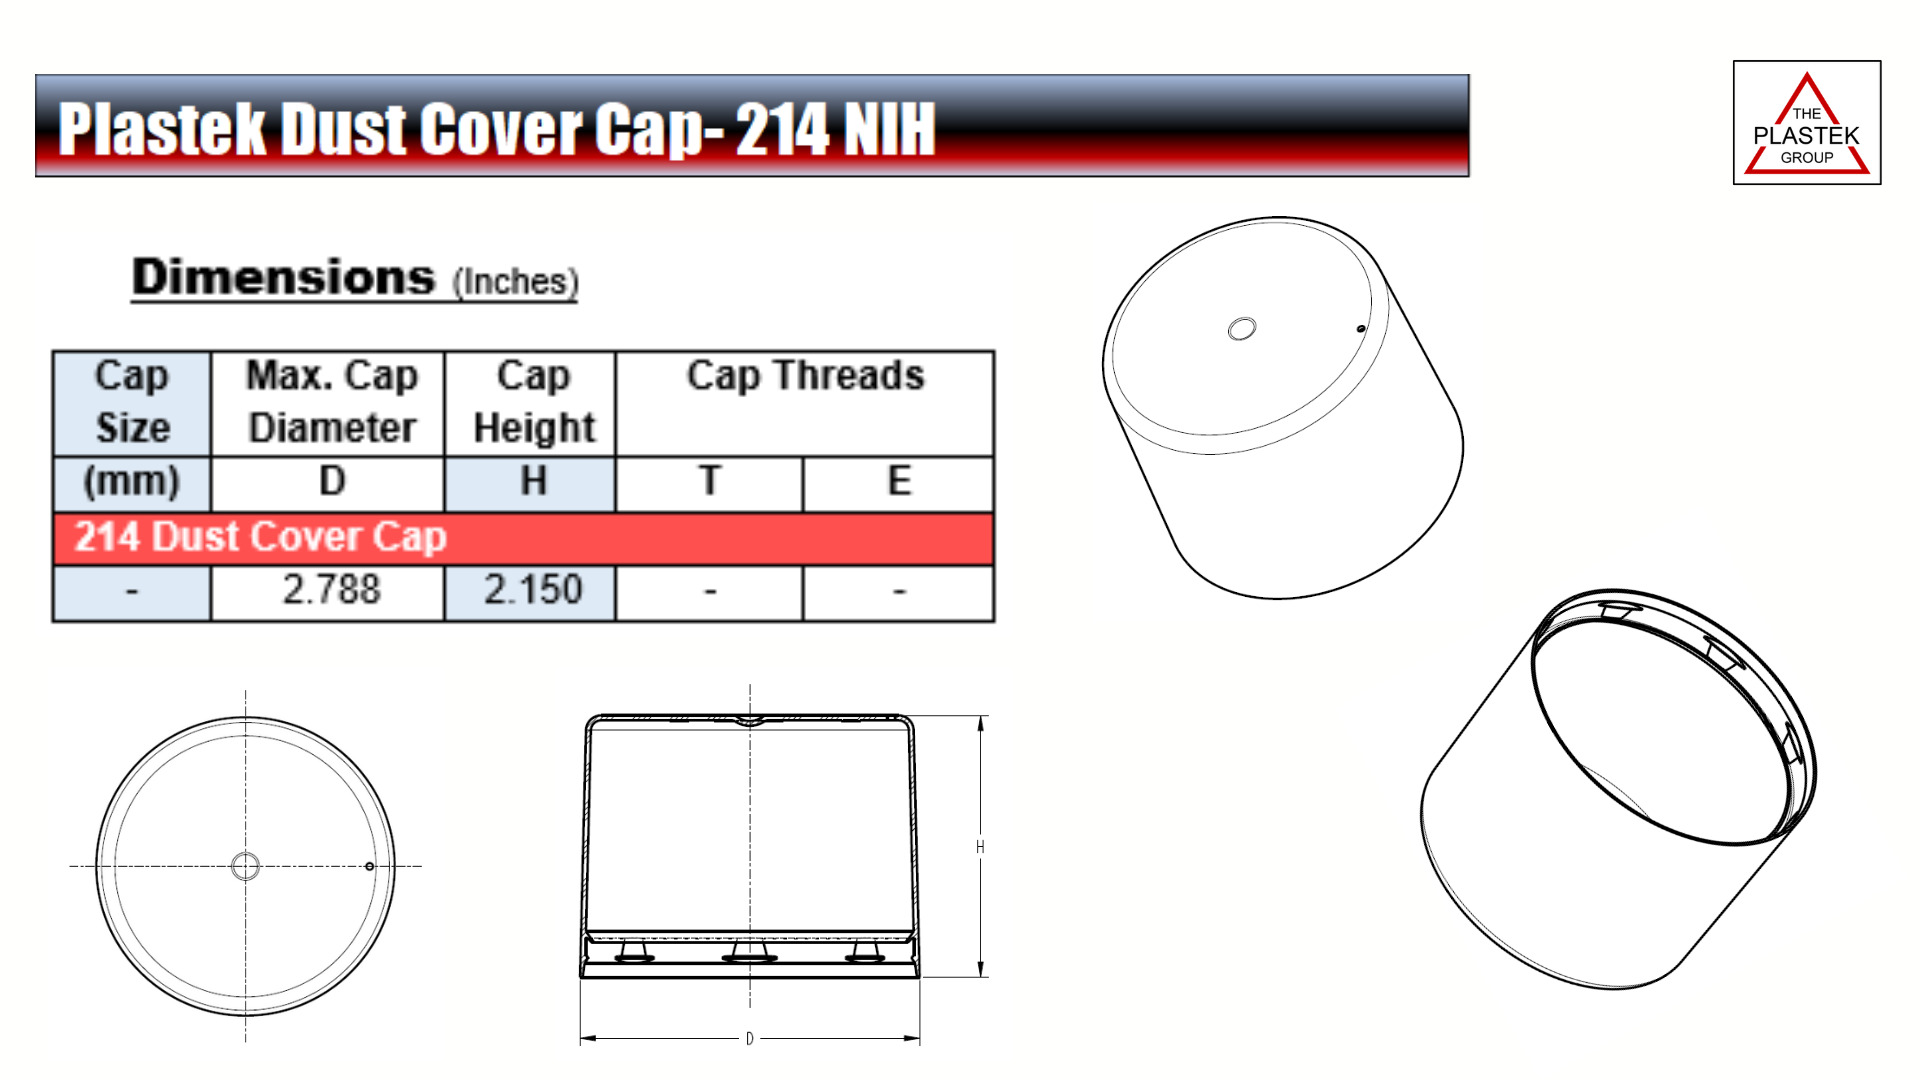 Dust cover cap dimensions